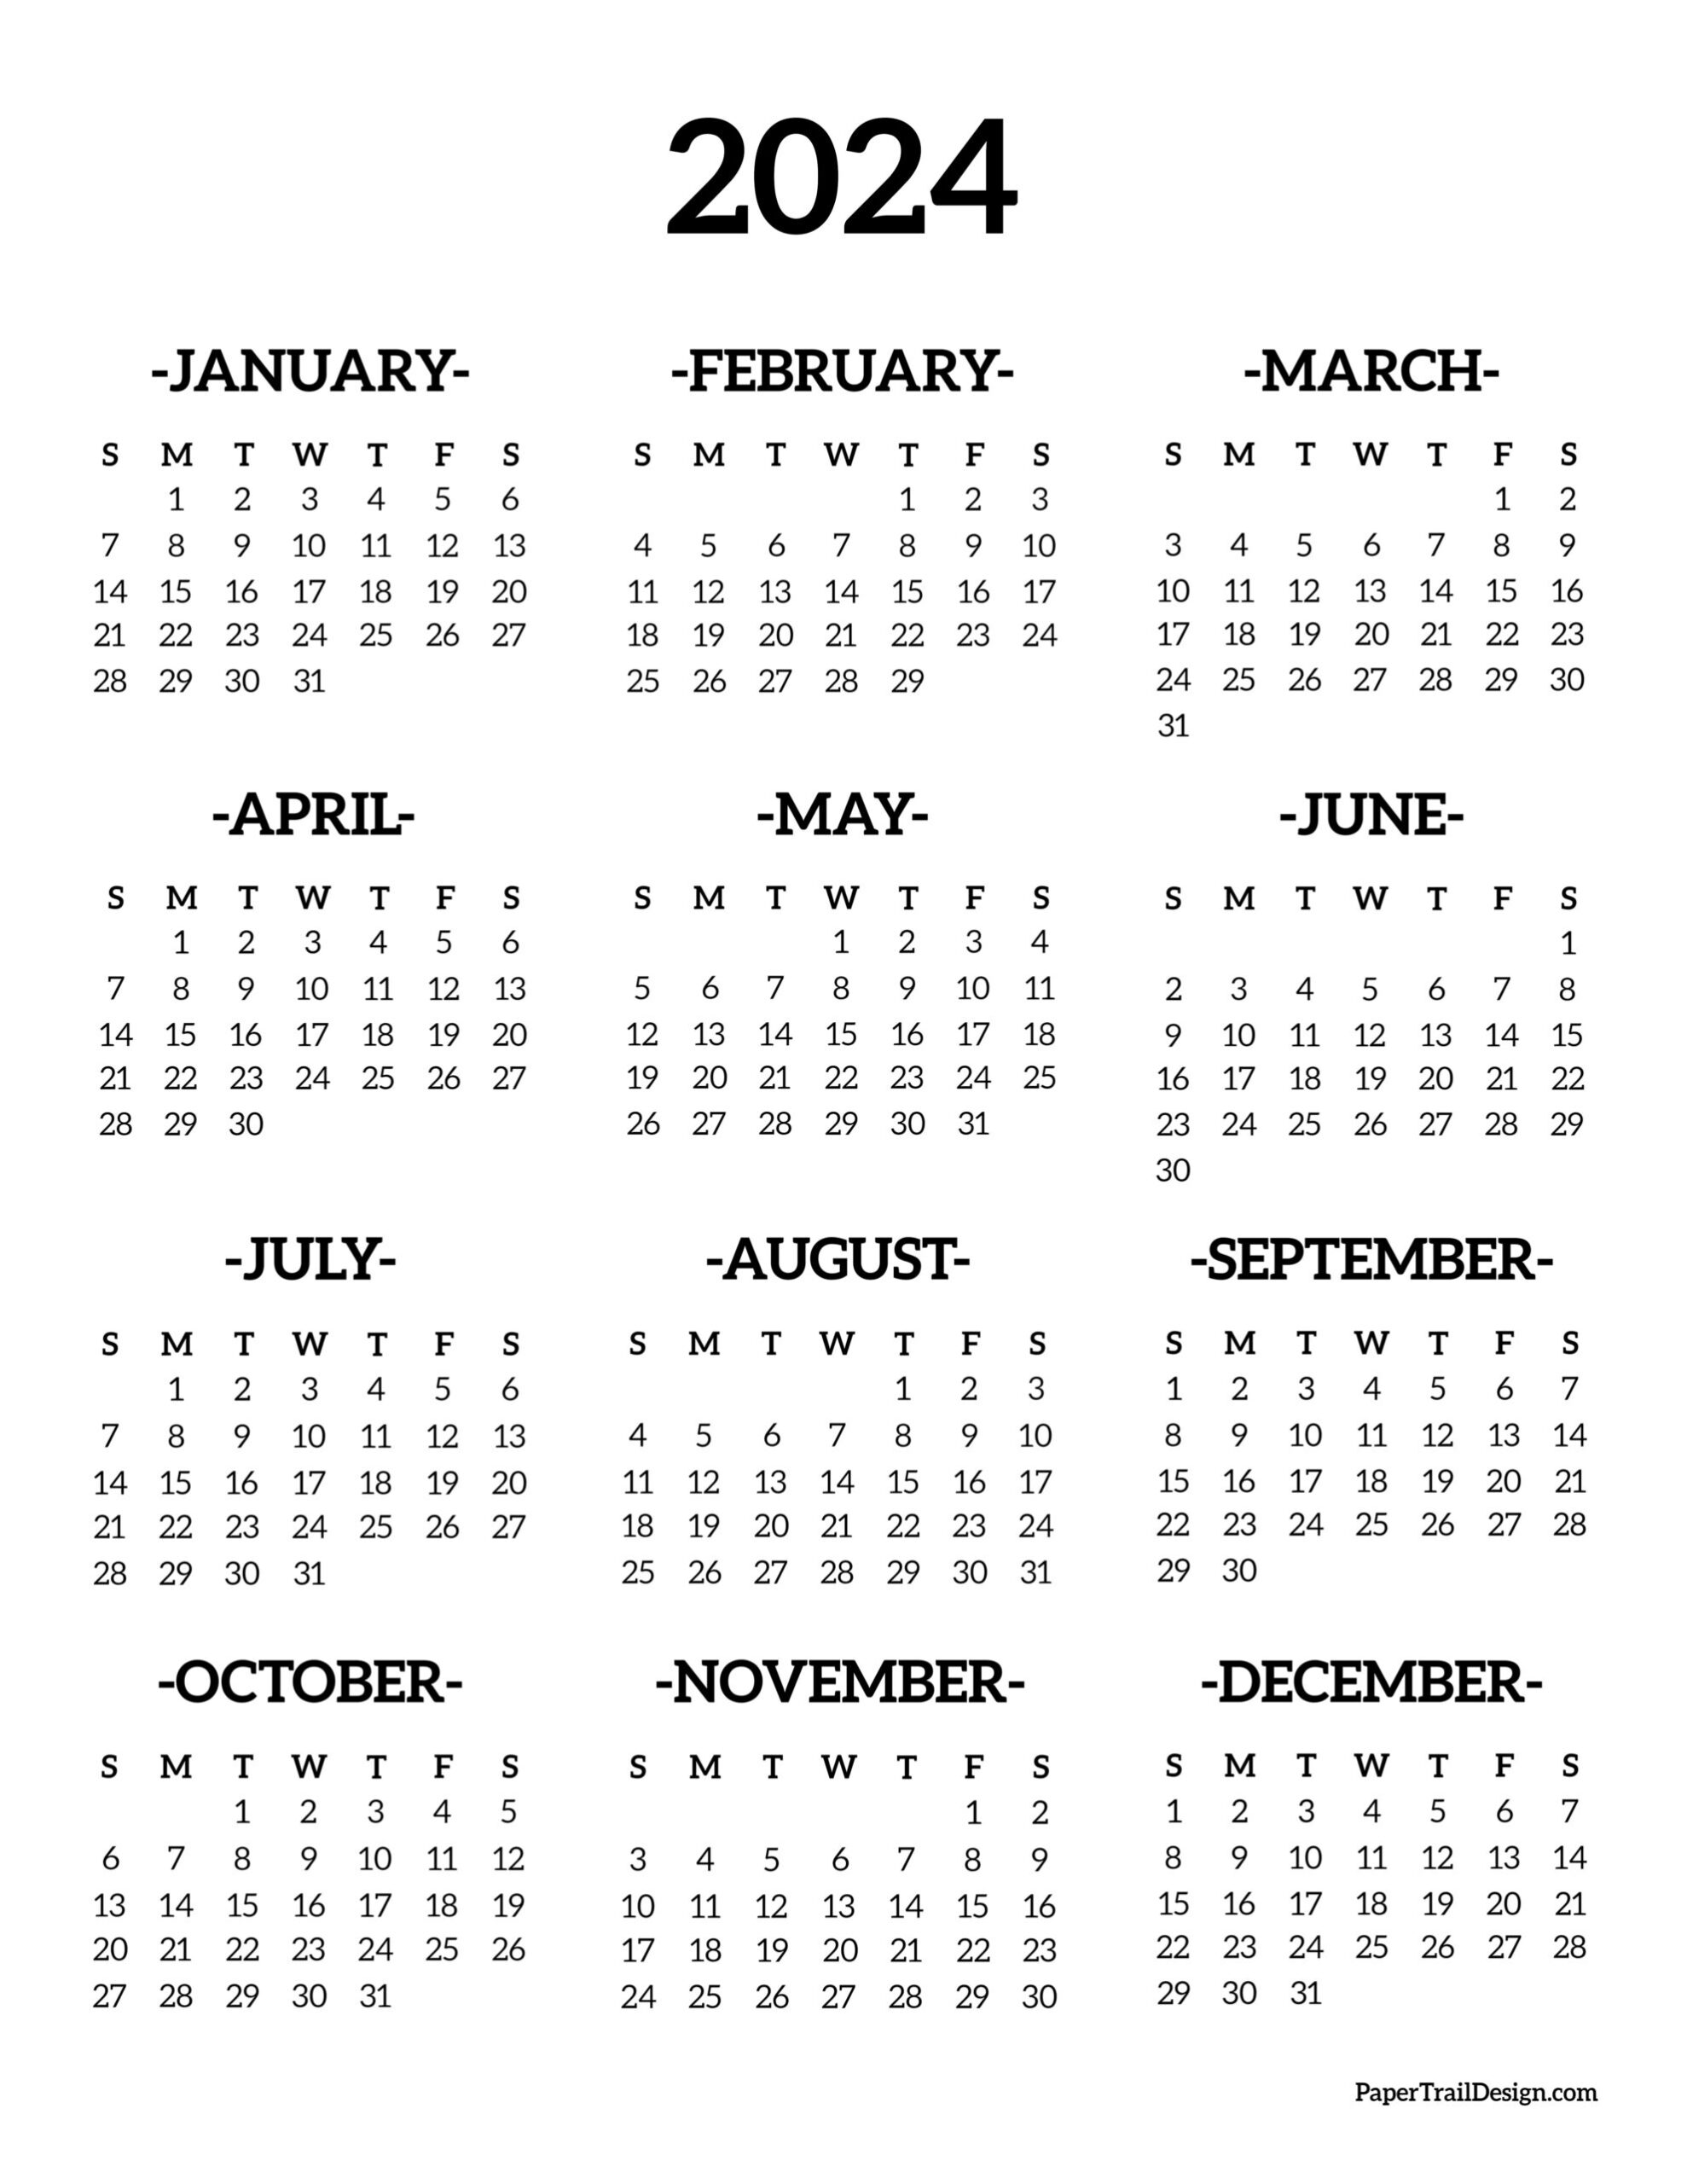 Calendar 2024 Printable One Page - Paper Trail Design | 1 Year Printable Calendar 2024